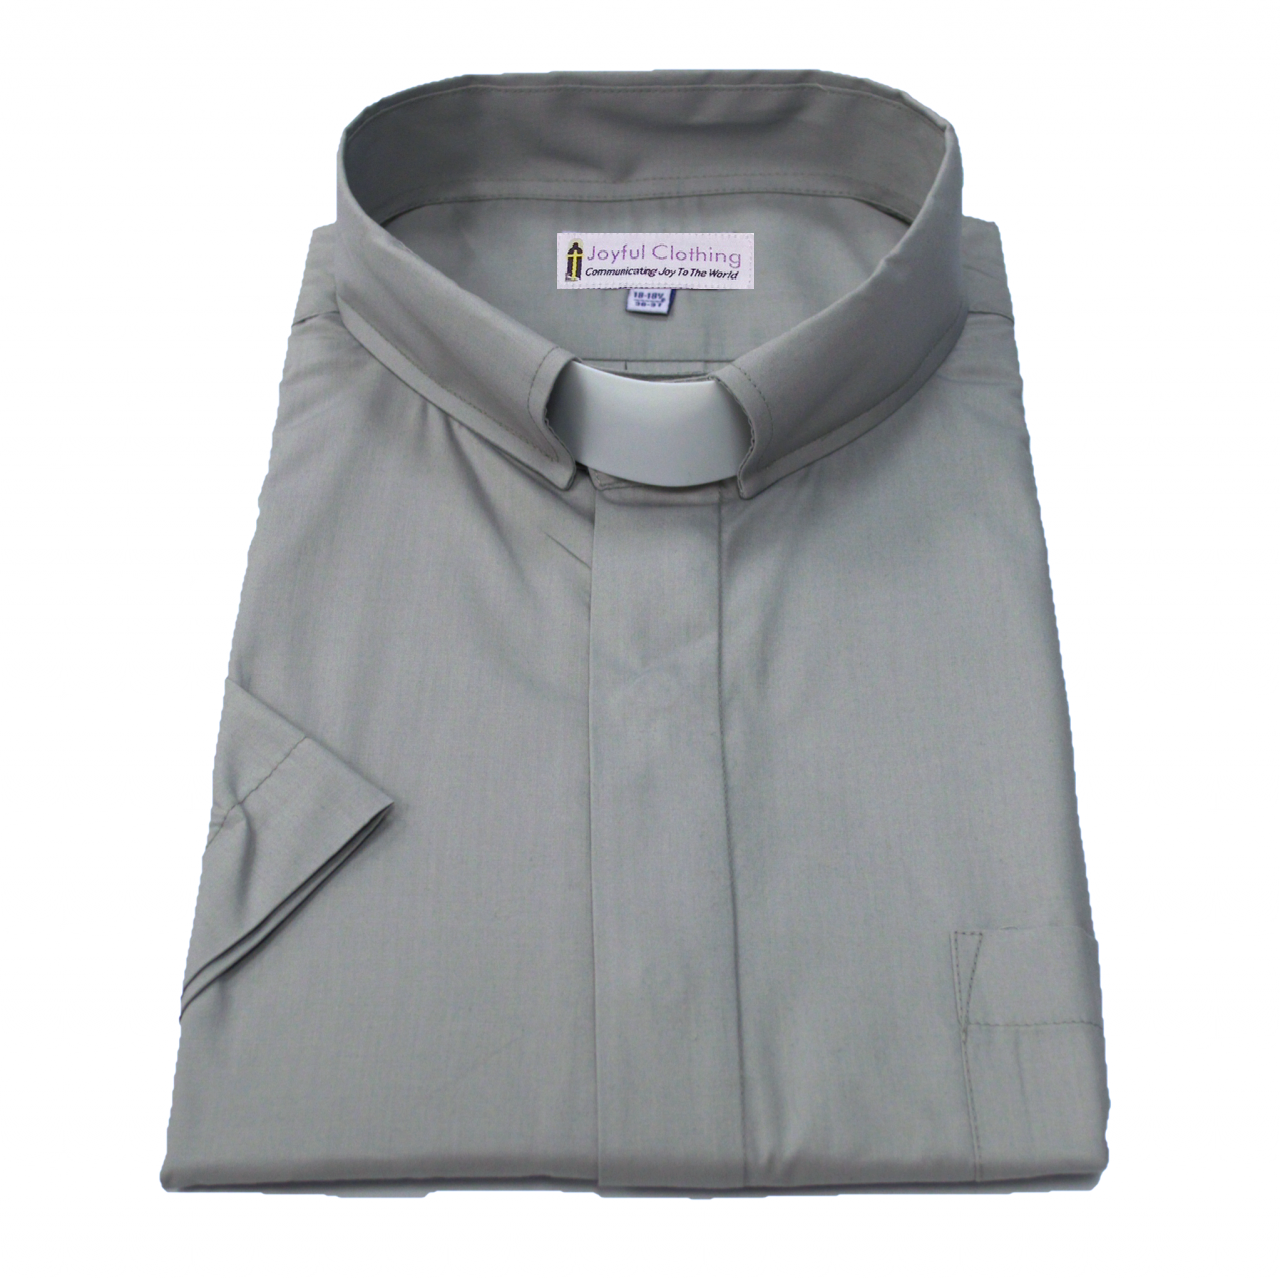 561. Women's Short-Sleeve Tab-Collar Clergy Shirt - Gray